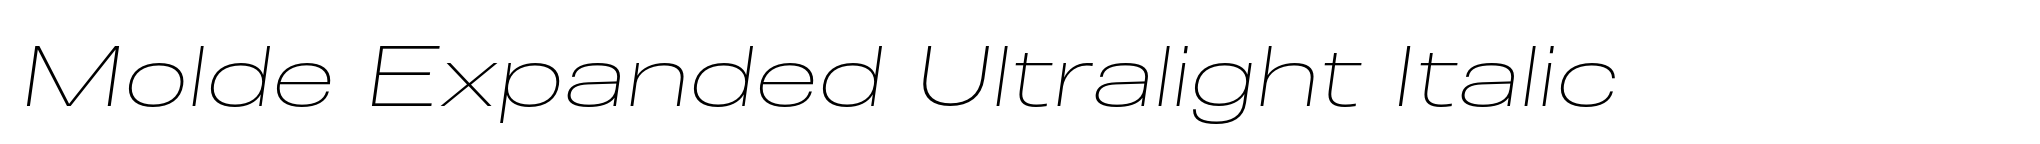 Molde Expanded Ultralight Italic image